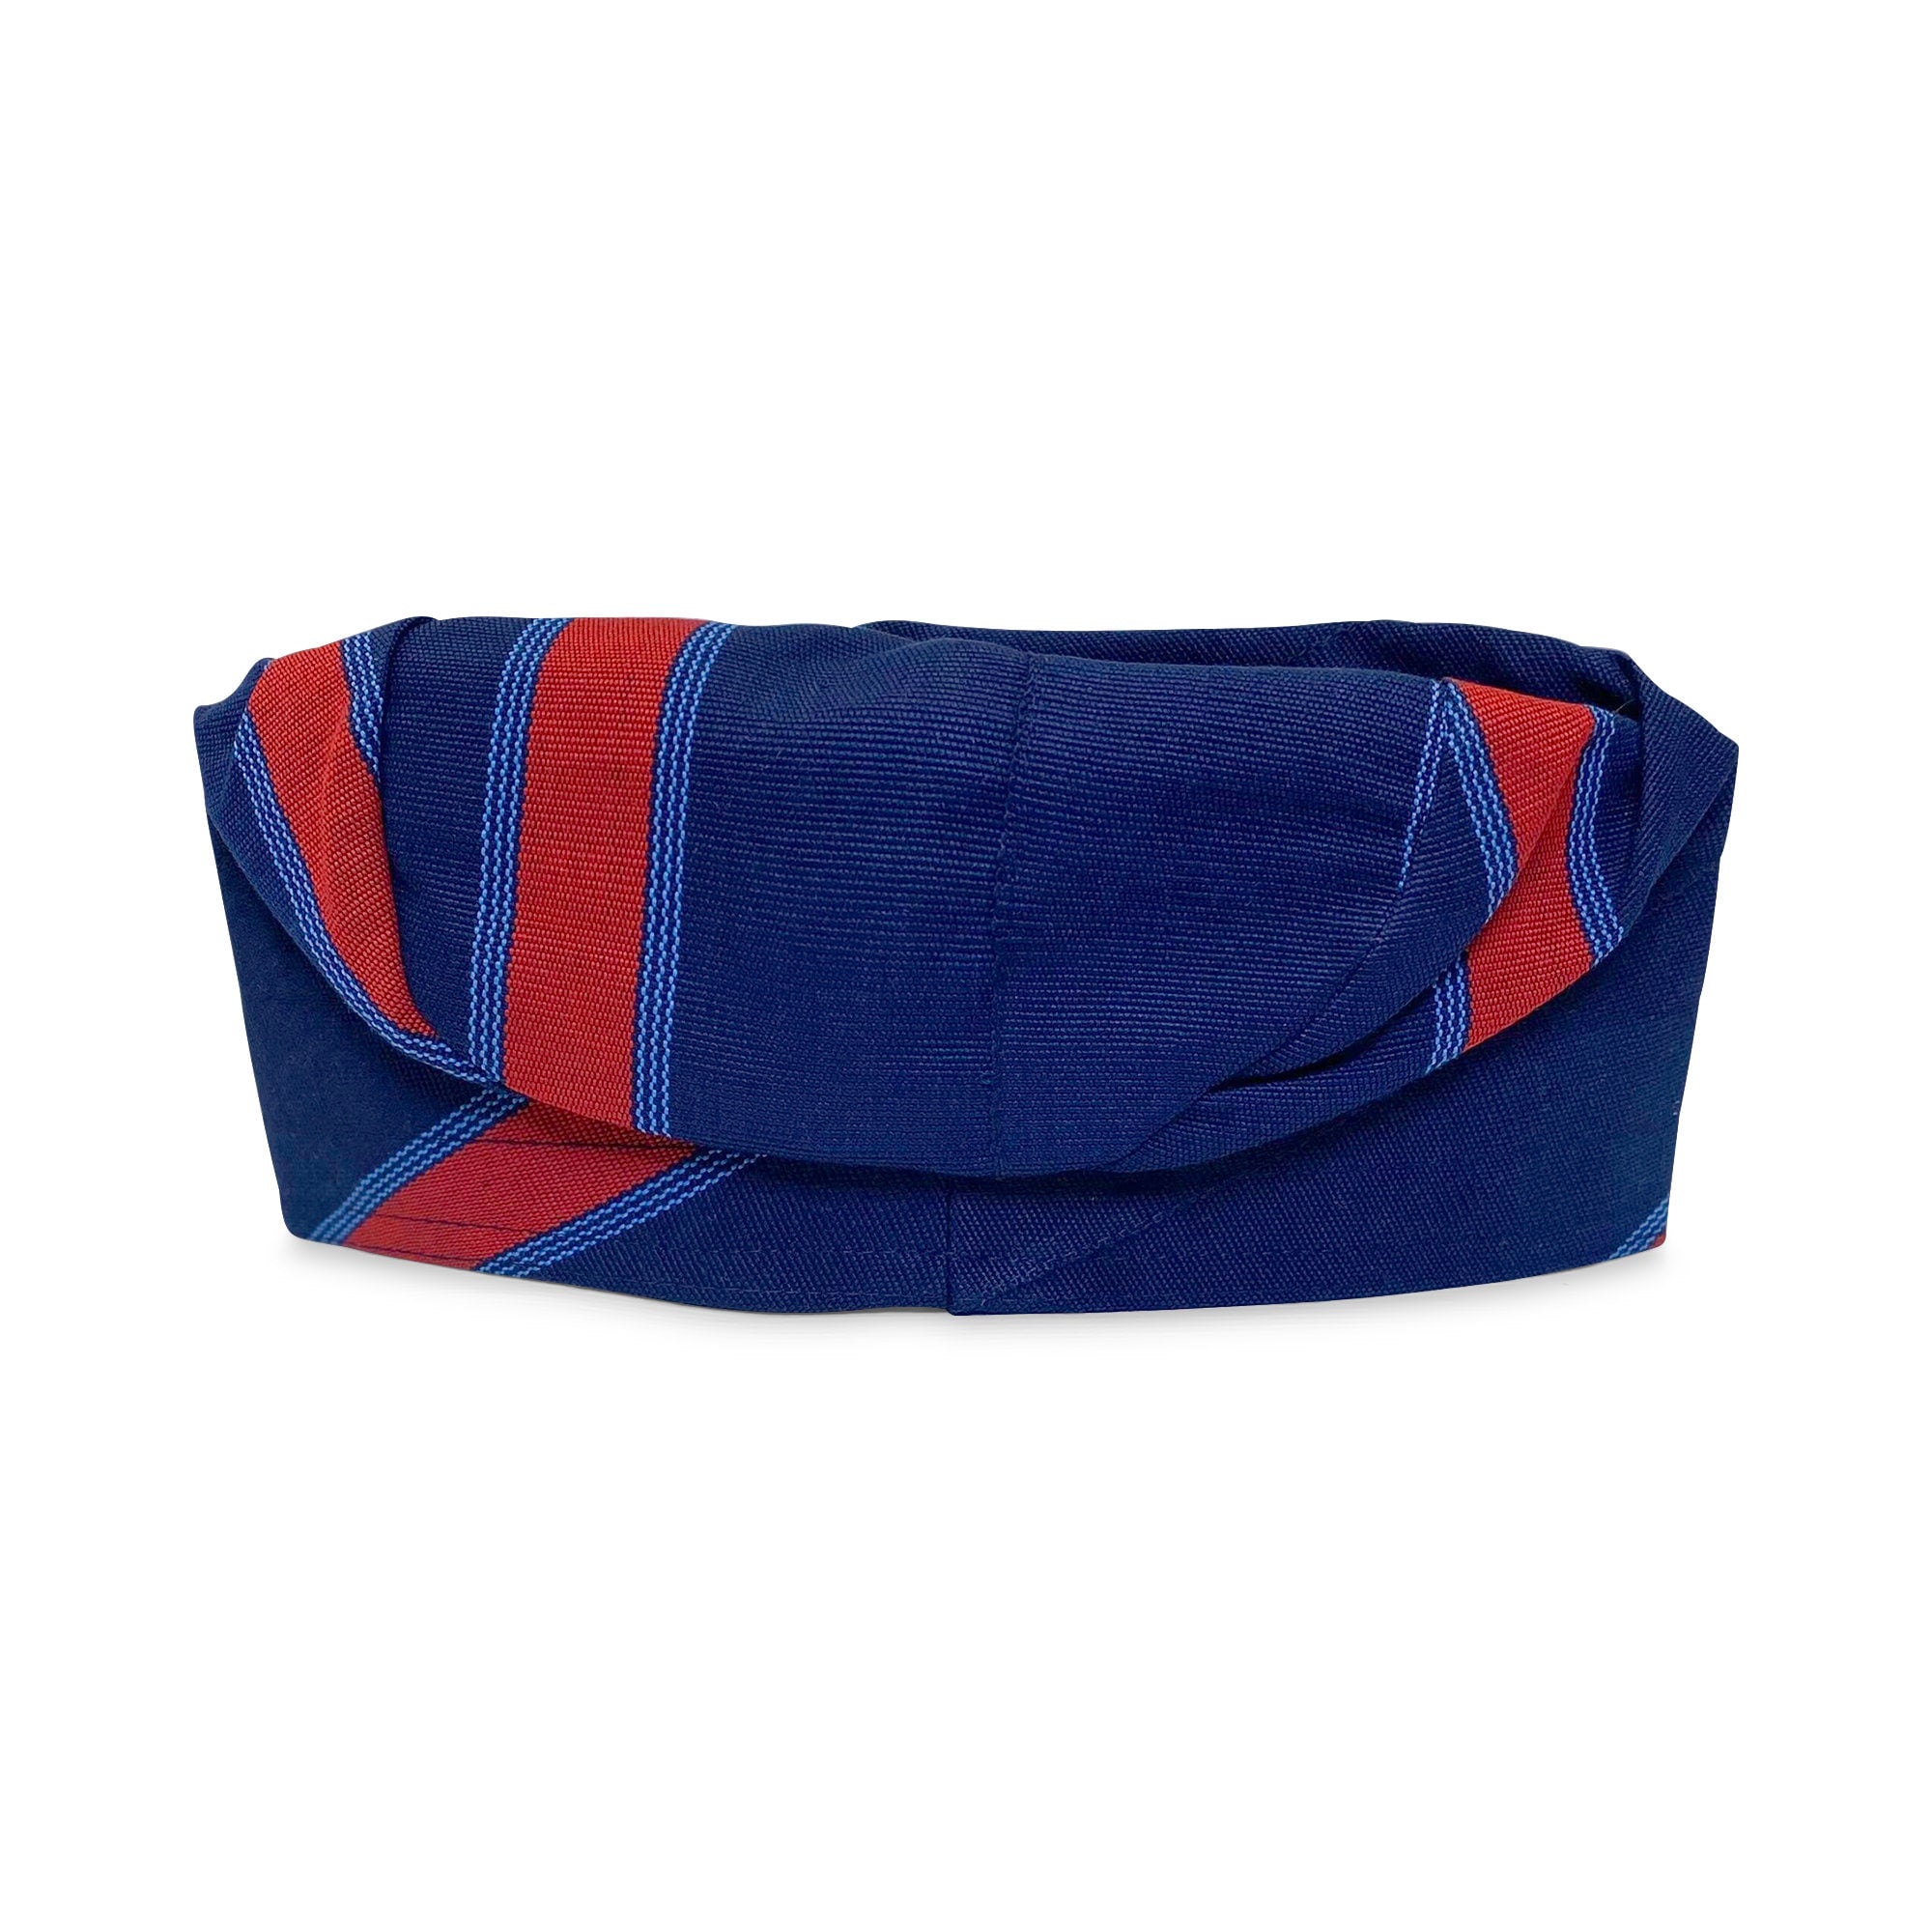 New Nigerian blue and red Aso Oke cap with embroidery fila cap Aso Oke cap